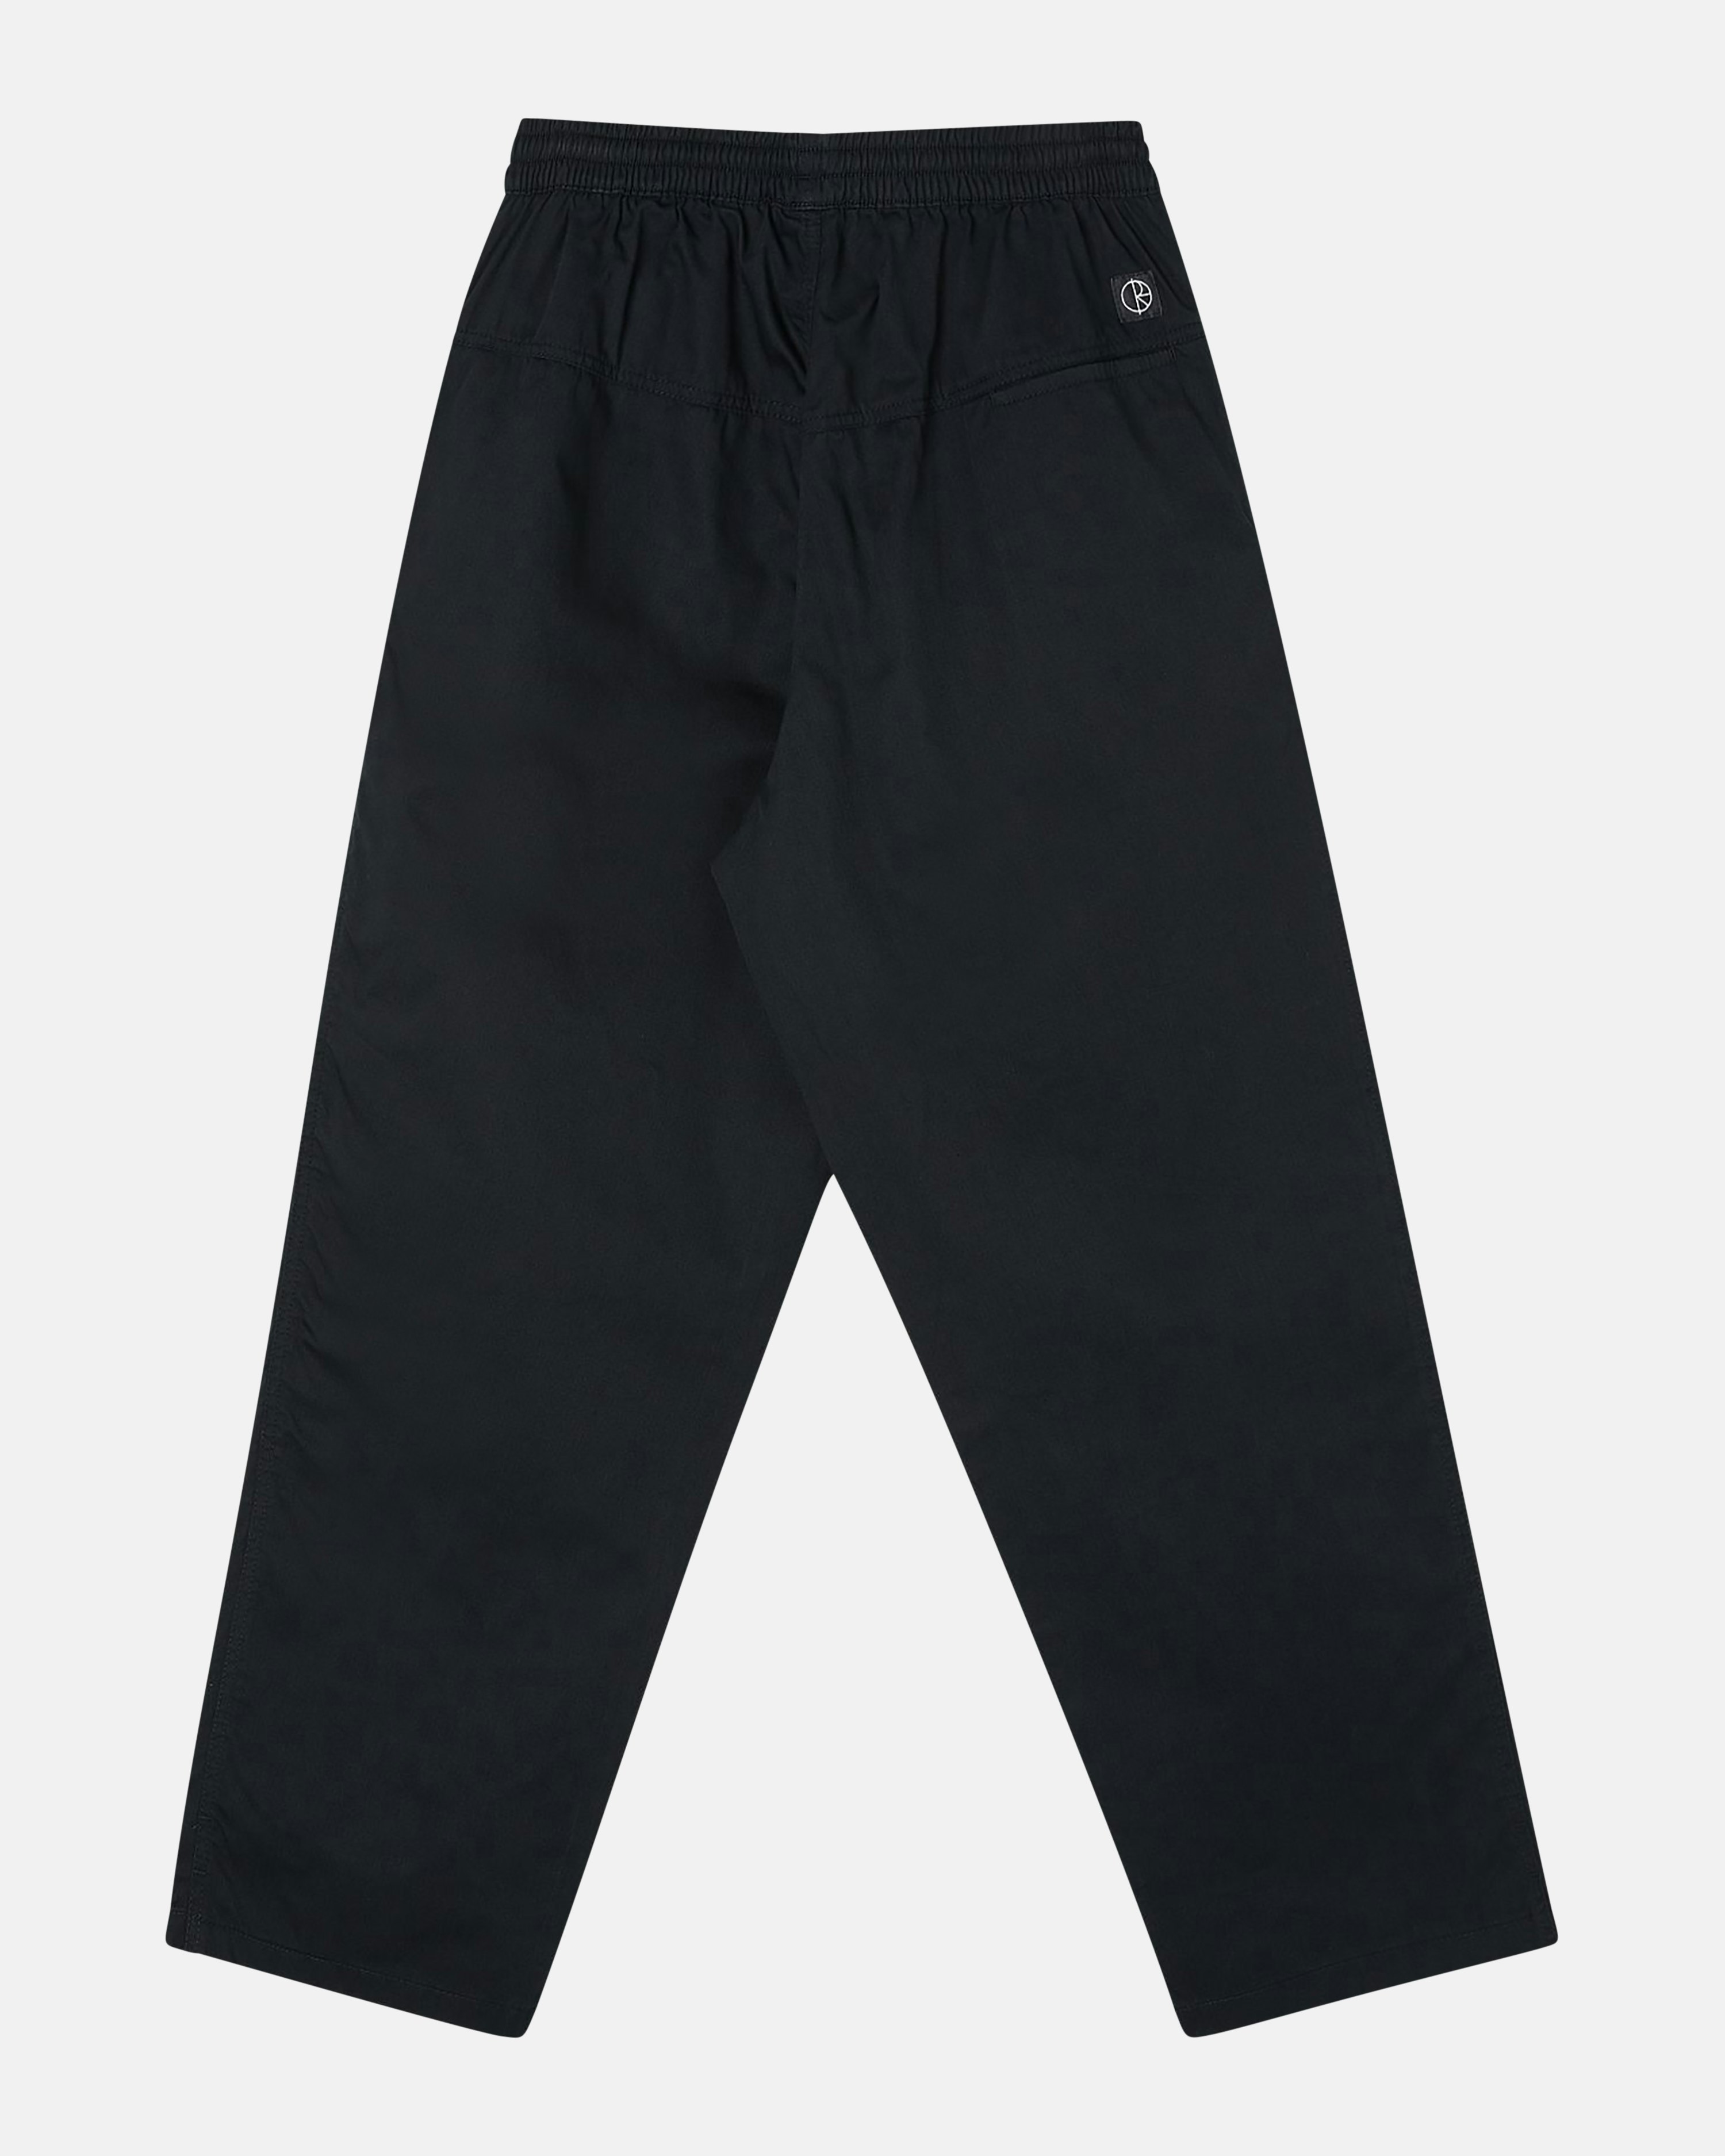 Polar Skate Co. Pants - Surf Black | Men | Junkyard